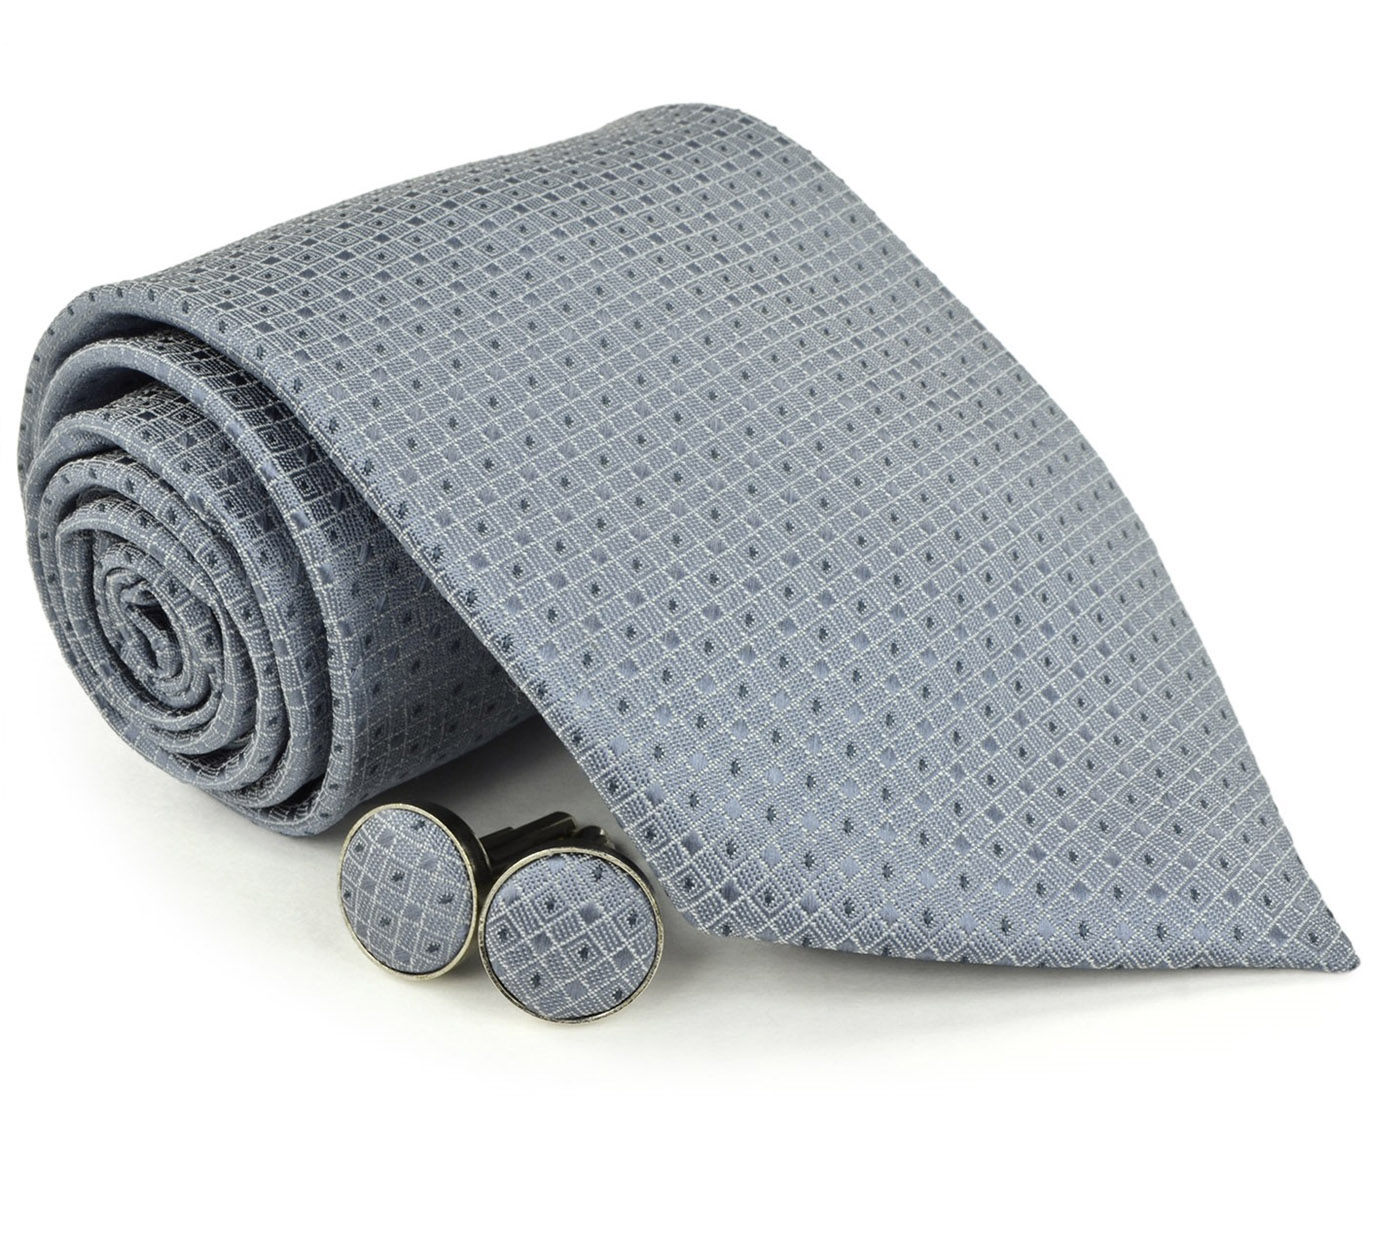 Moda Di Raza Men's NeckTies - 3 Inch Tie - Gift Box Sets - Gray Tie With Cuff-link In Box